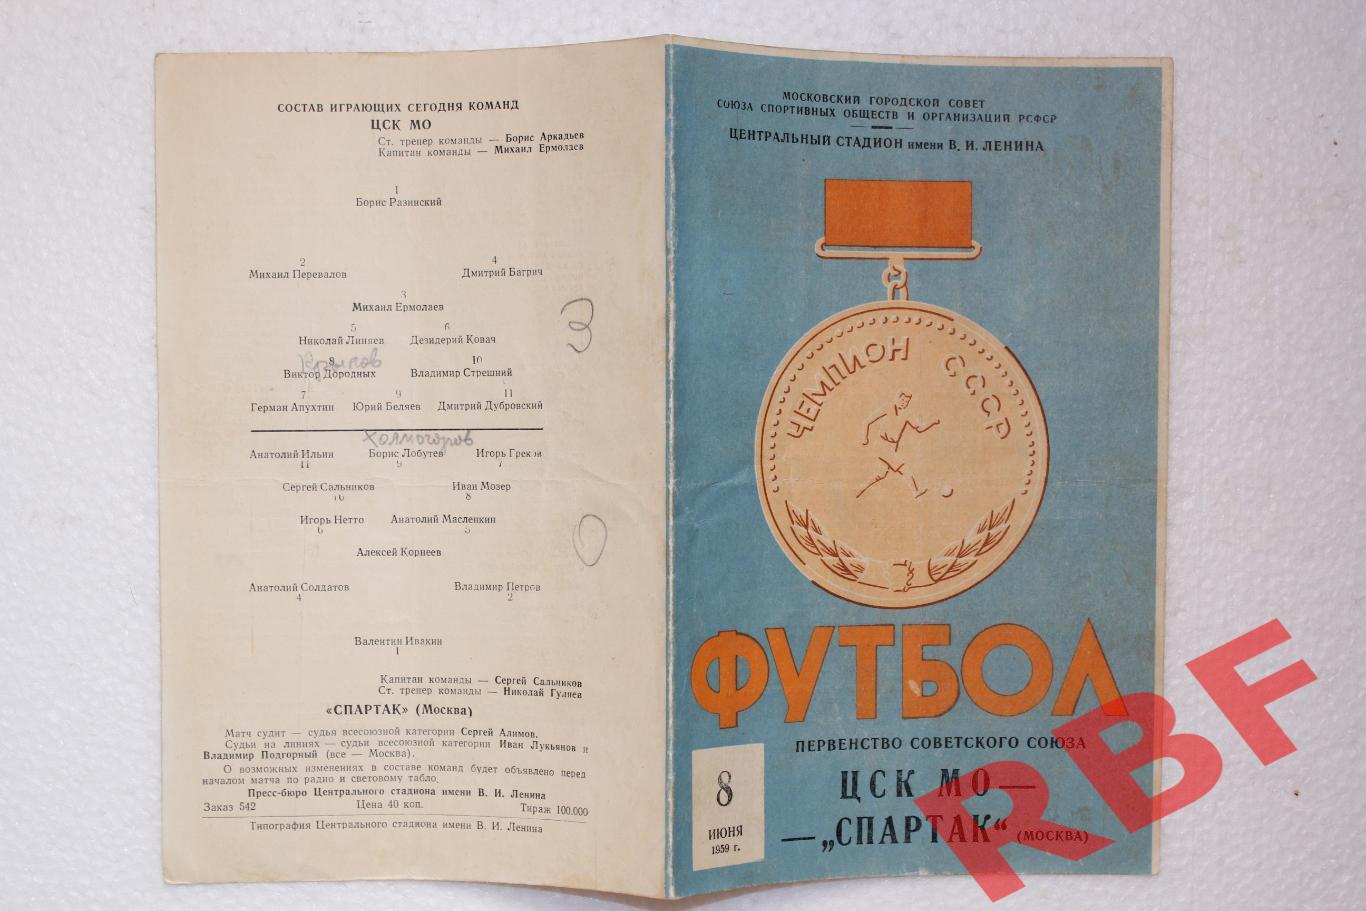 ЦСК МО - Спартак,8 июня 1959 1